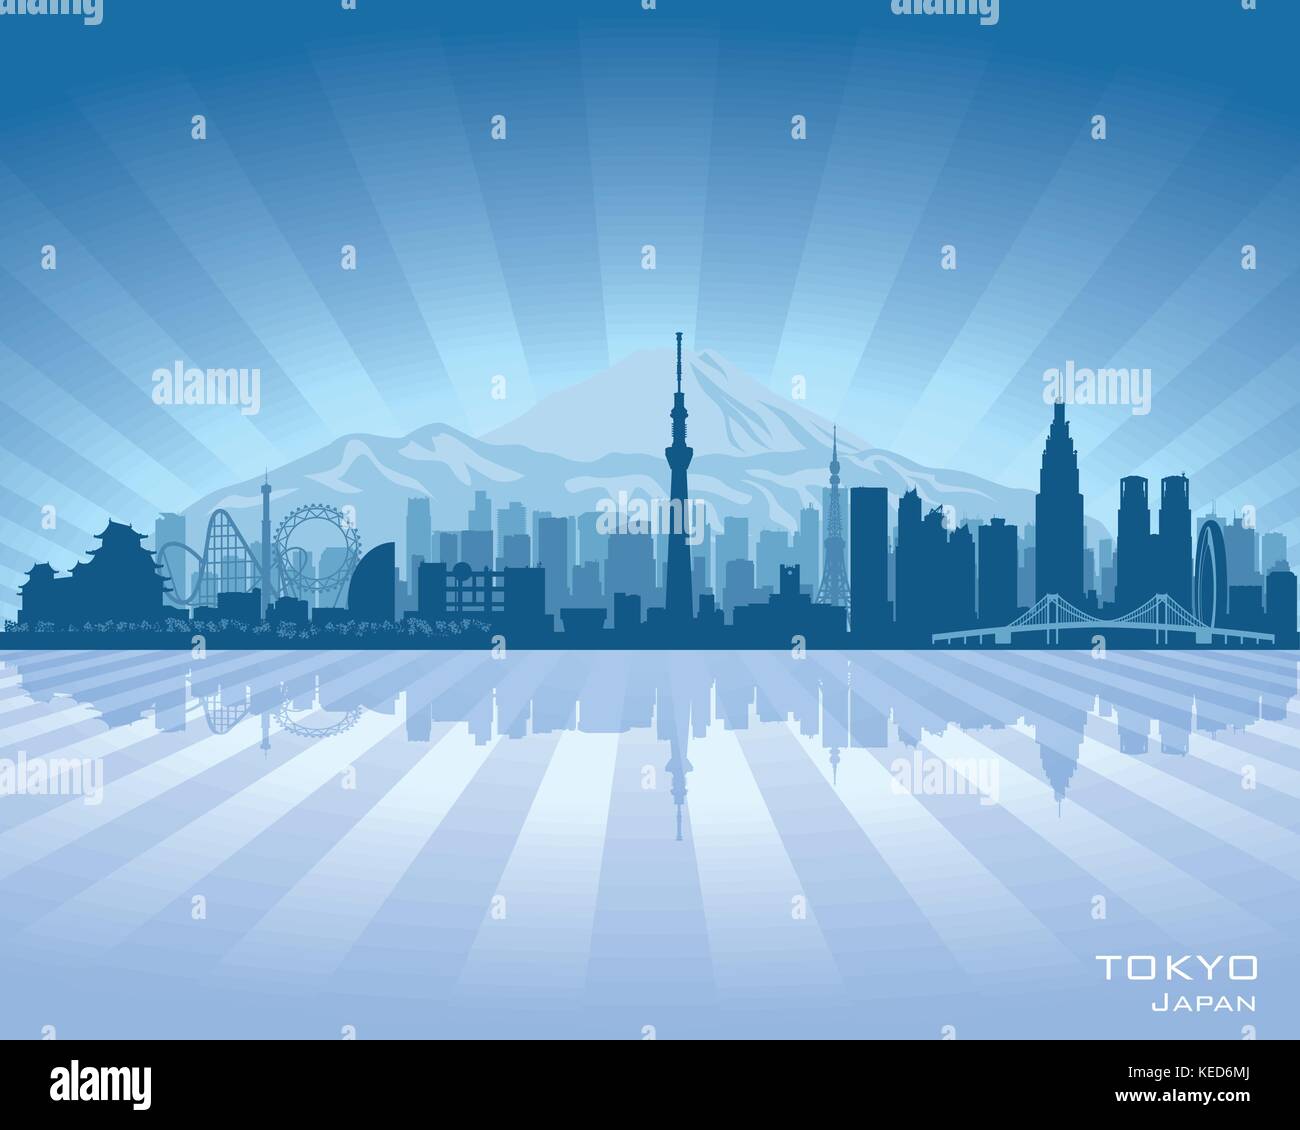 Tokyo Japan city skyline vector silhouette illustration Stock Vector